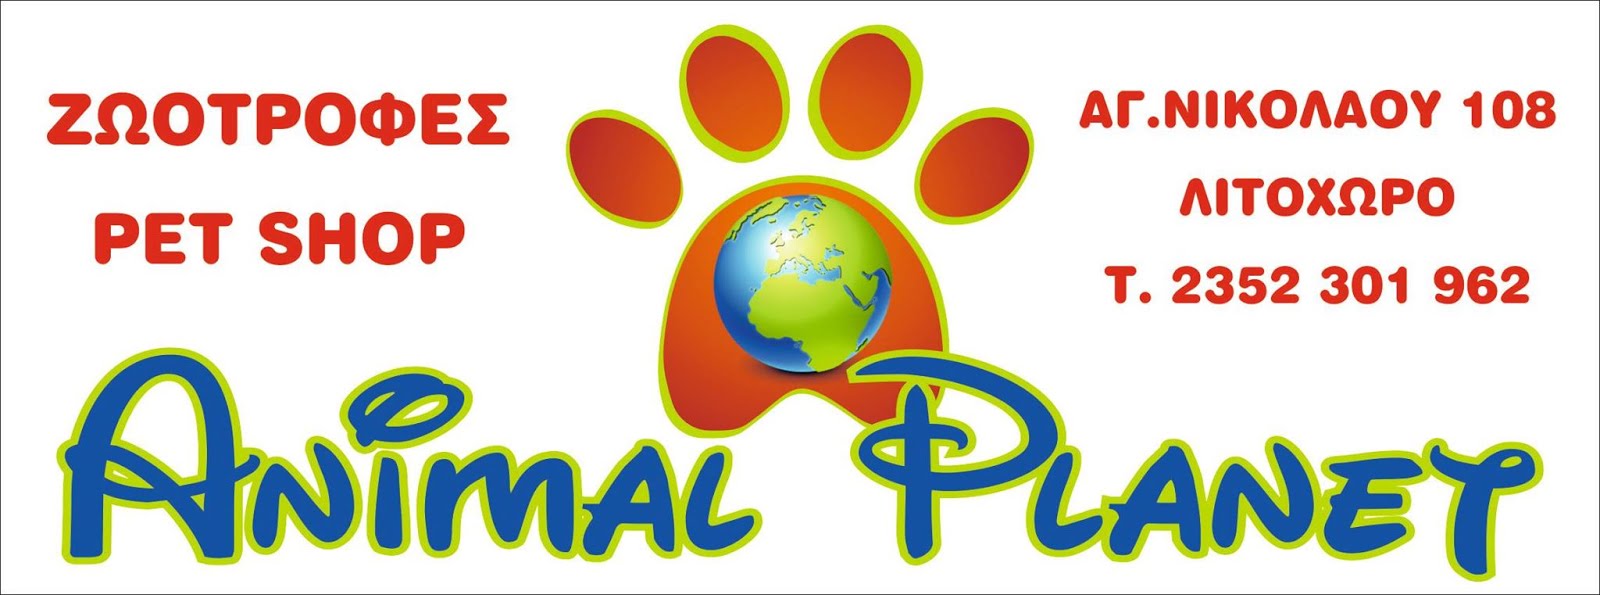 PET SHOP ANIMAL PLANET